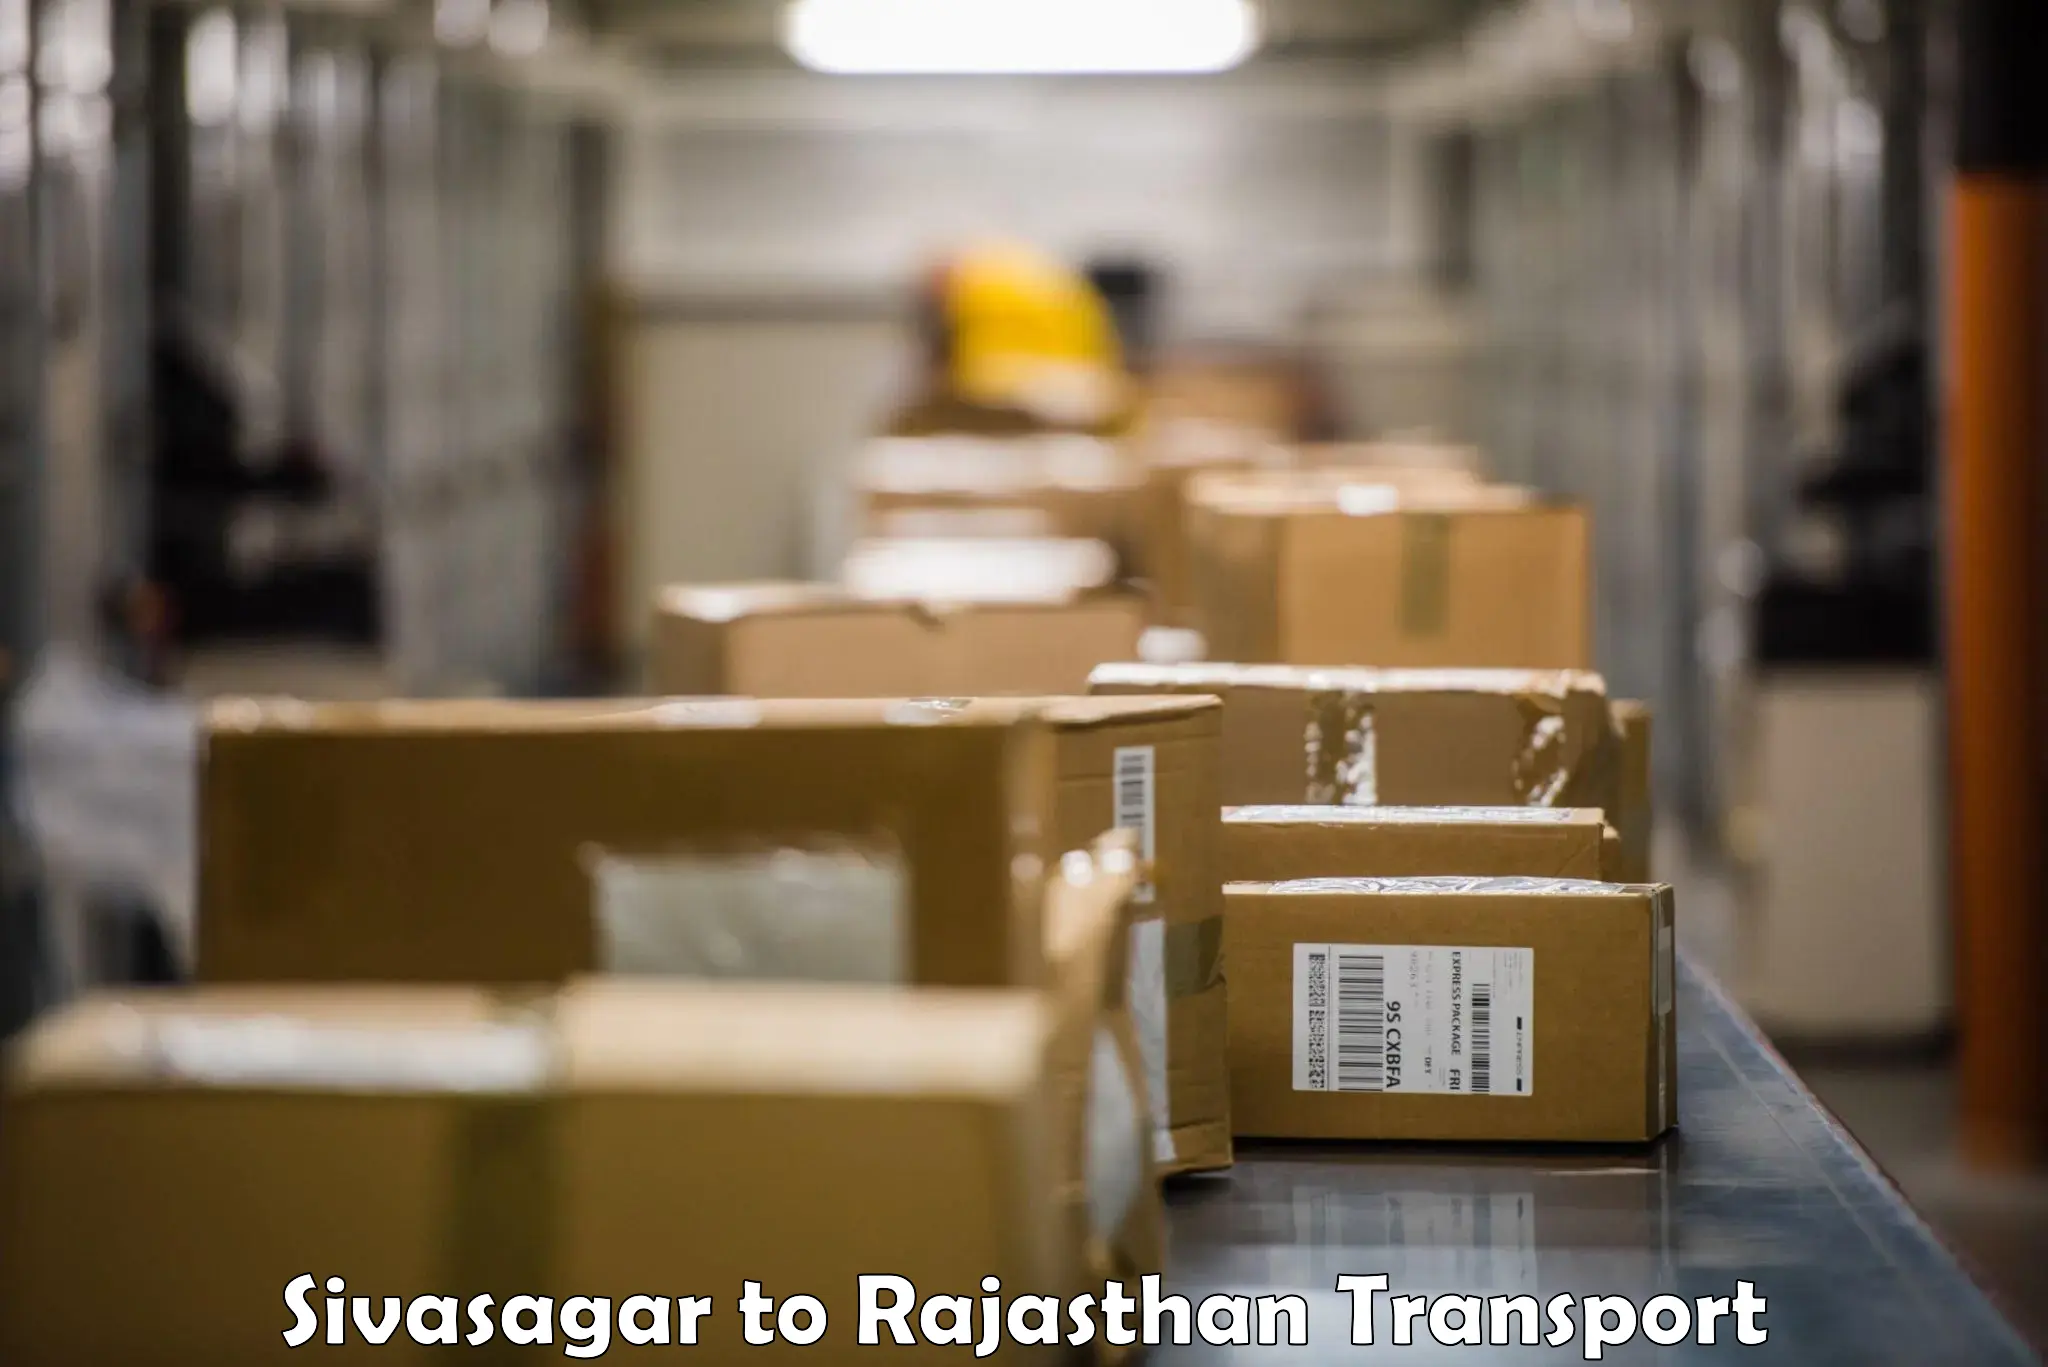 Daily transport service Sivasagar to Jaipur